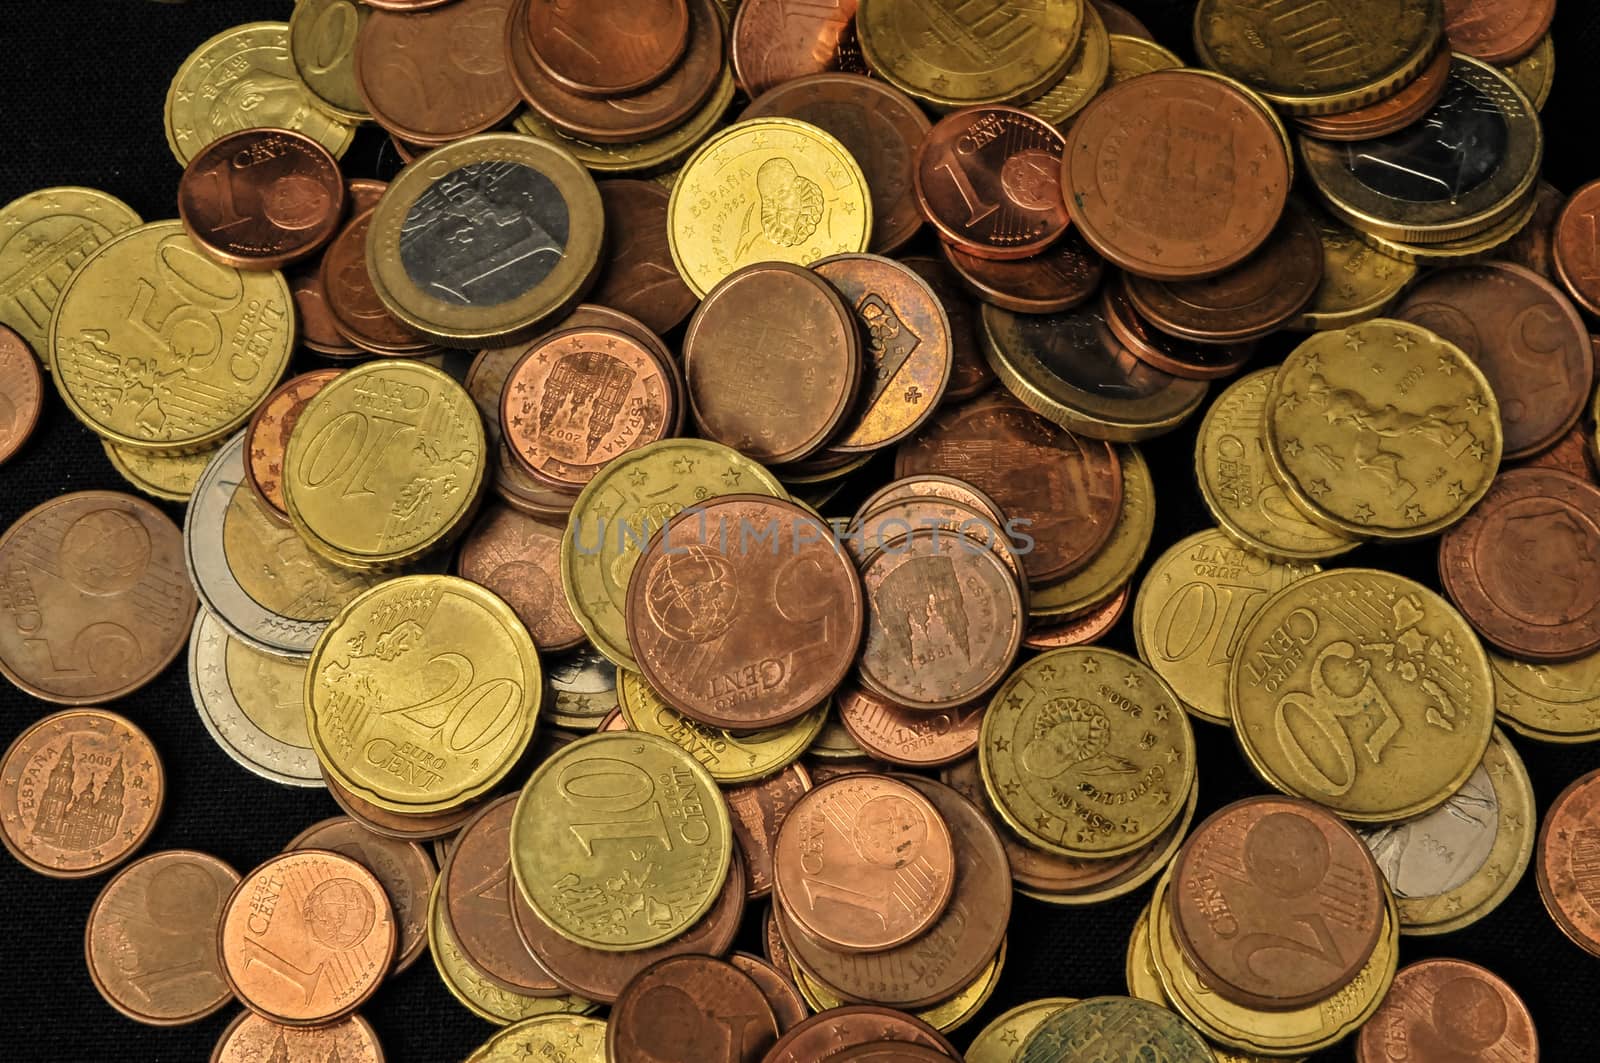 Background of Coins by underworld